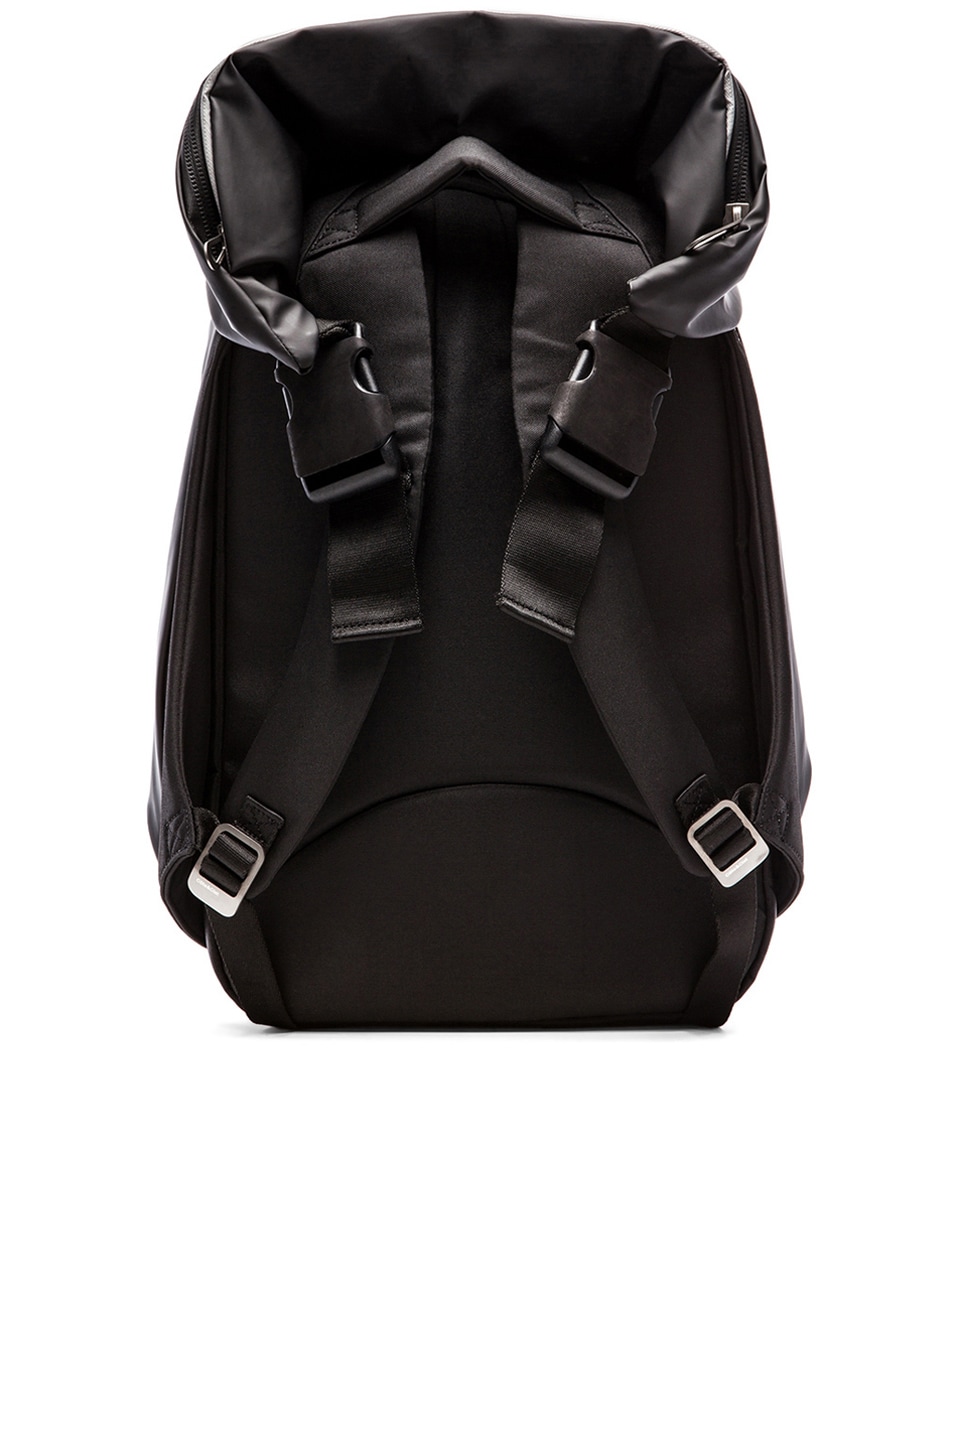 Cote & Ciel Nile Backpack in Obsidian | REVOLVE